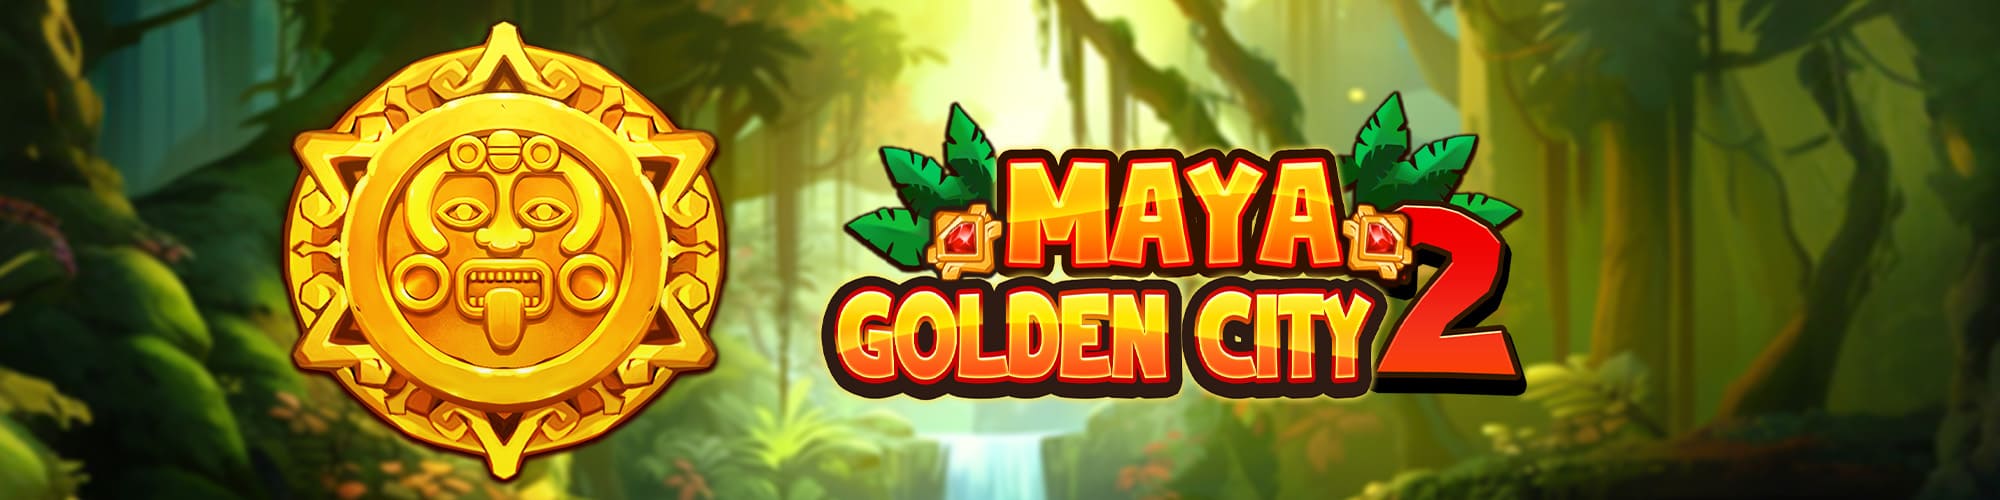 Maya Golden City2